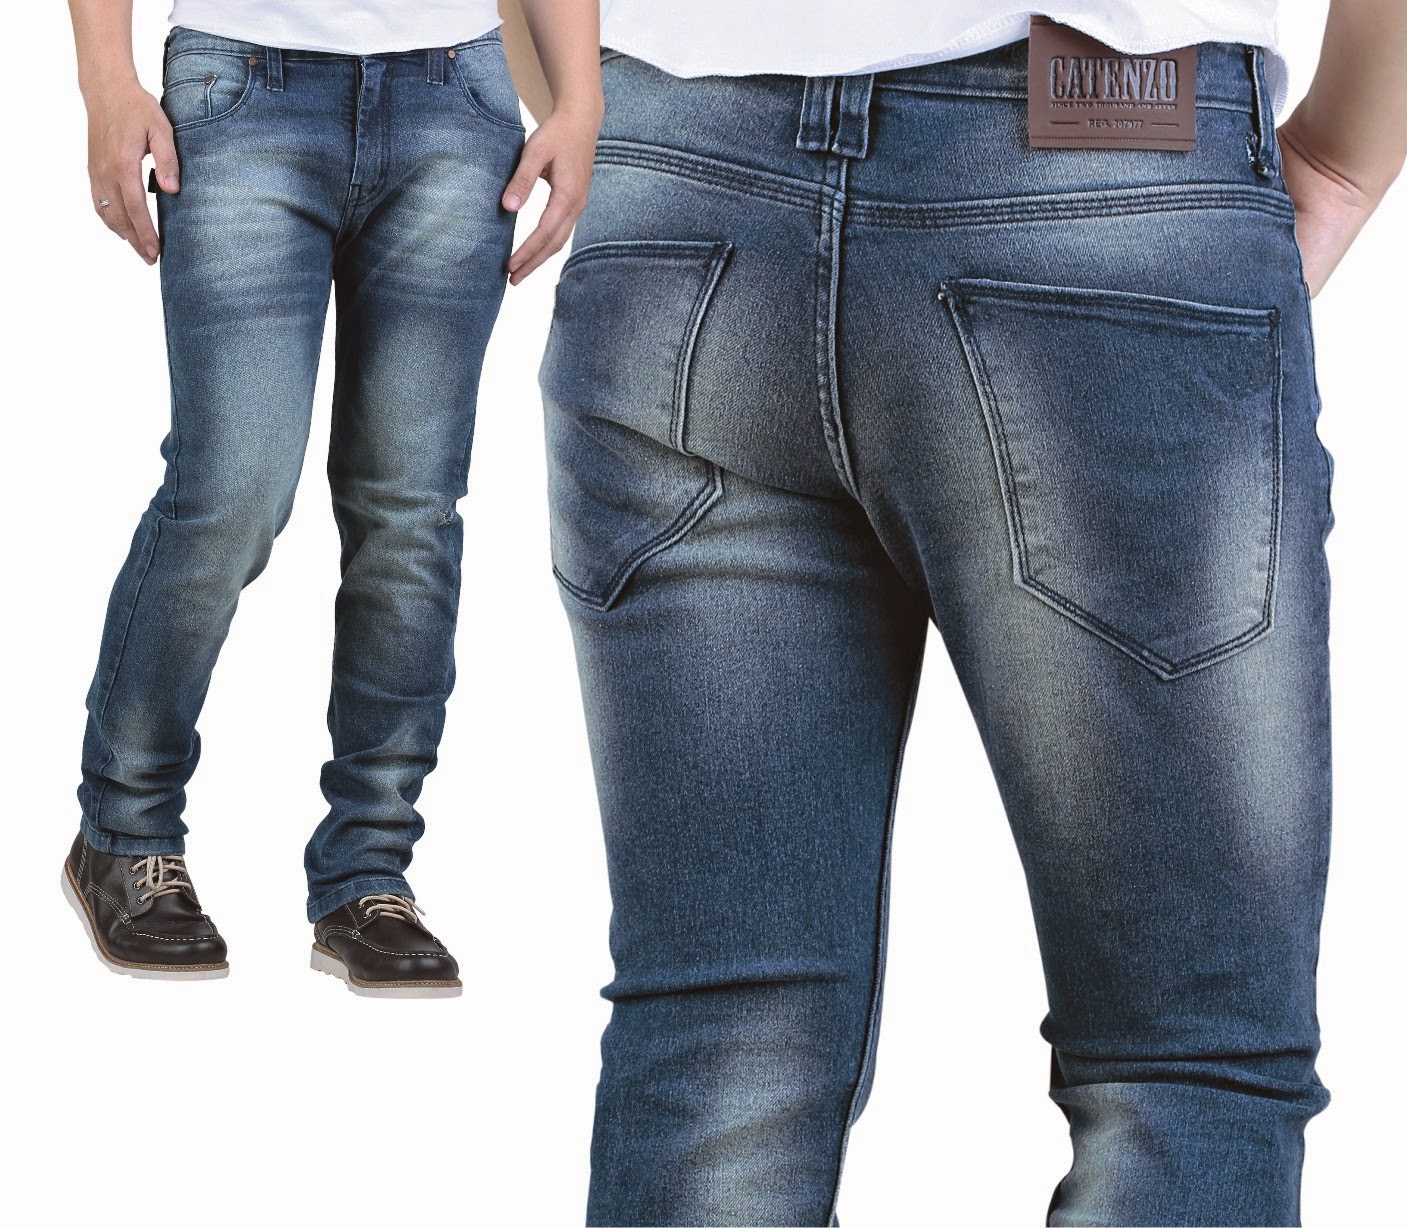 Catenzo Jeans Original